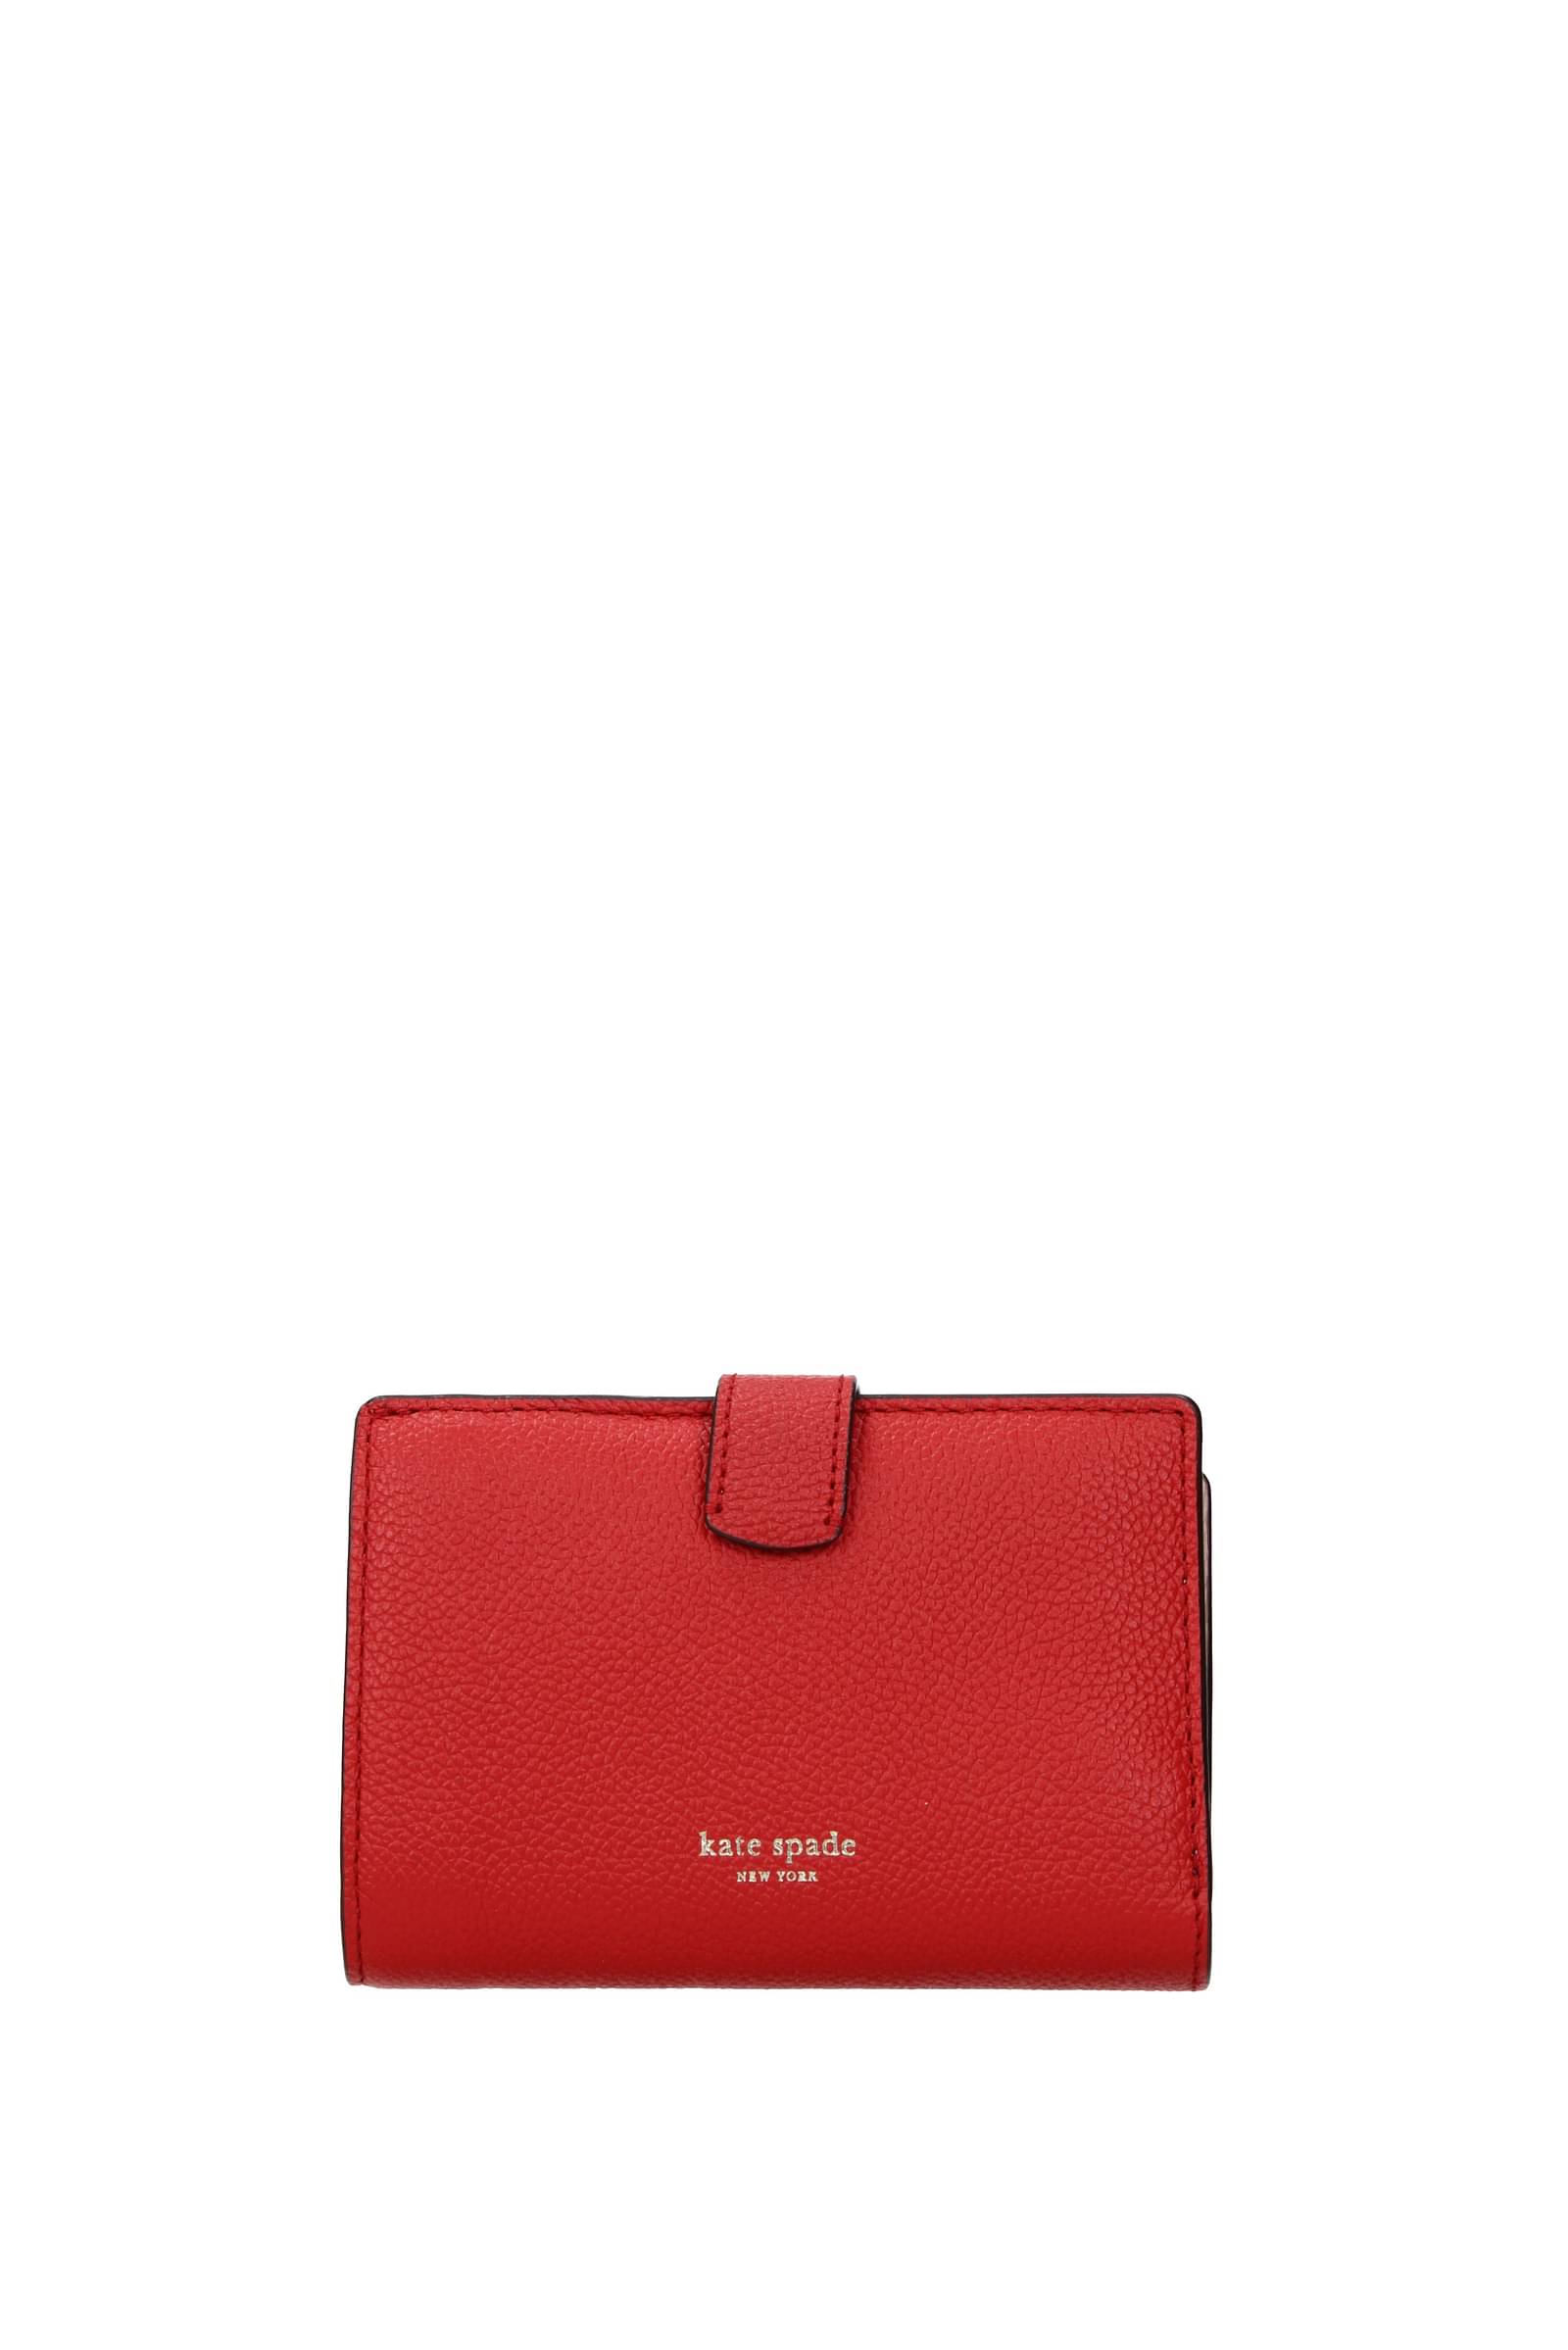 English Tan 5 Card Wallet: Minimalist Design, Maximum Quality - Popov  Leather®